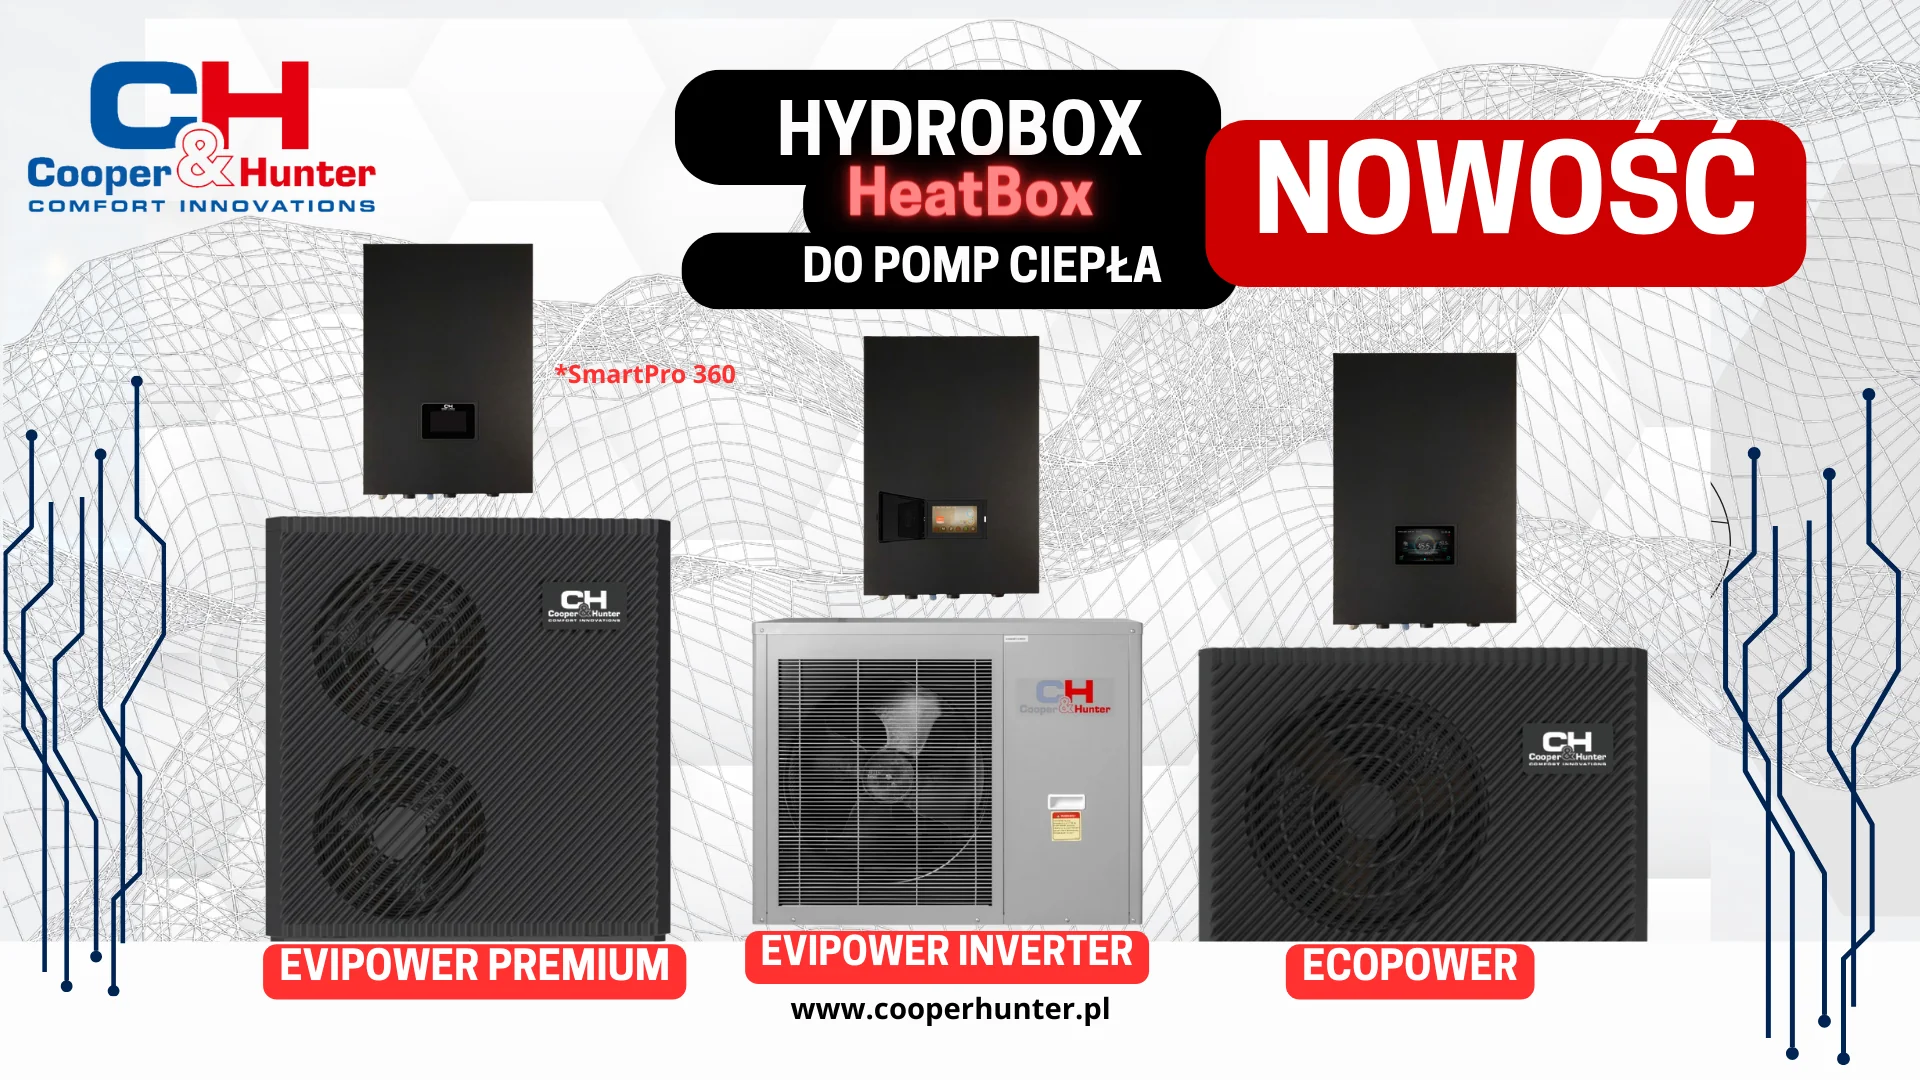 Nowość - Hydrobox HeatBox do pomp ciepła Cooper&Hunter